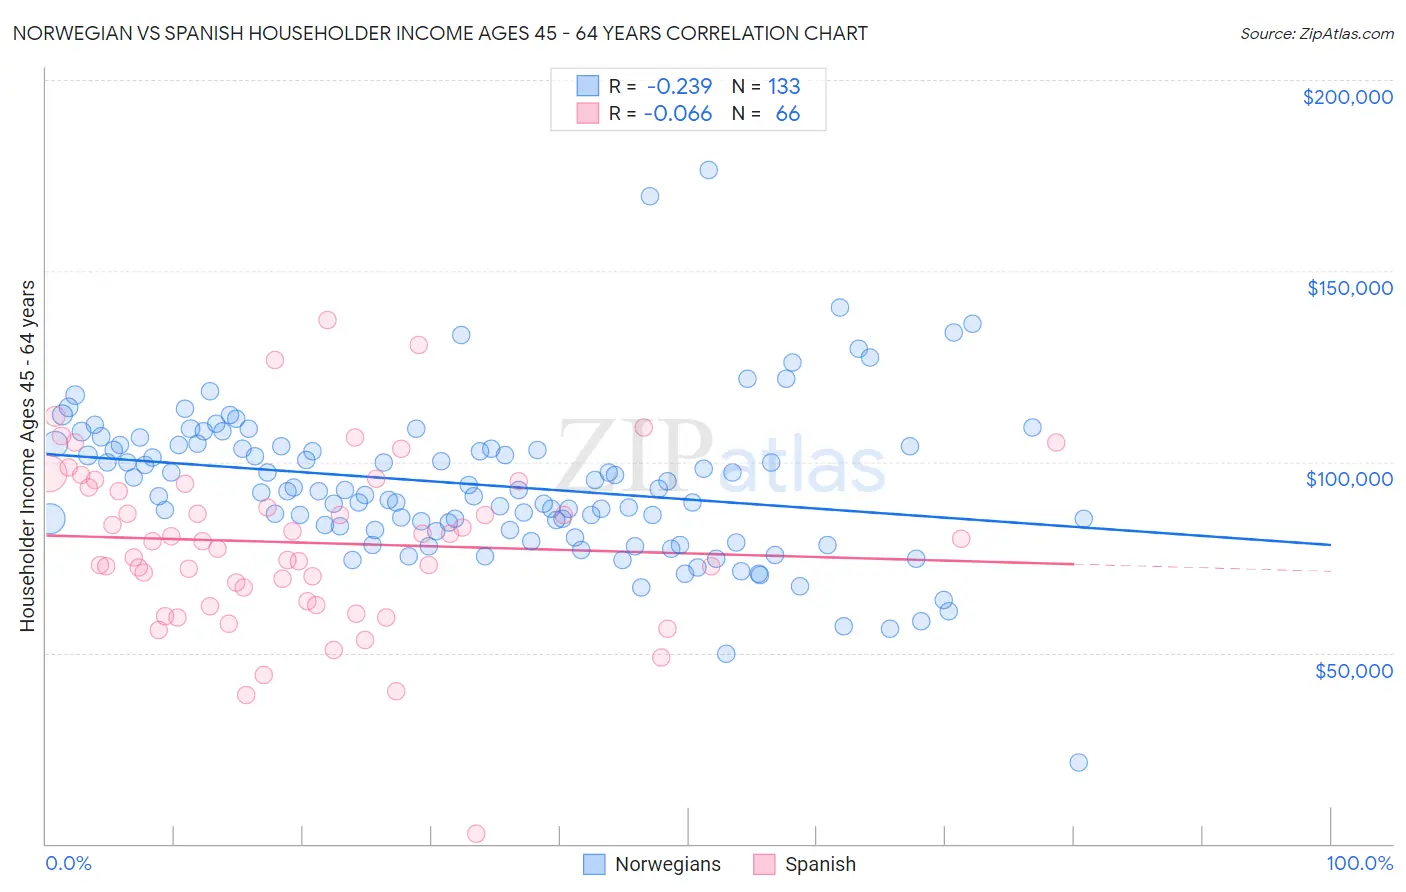 Norwegian vs Spanish Householder Income Ages 45 - 64 years